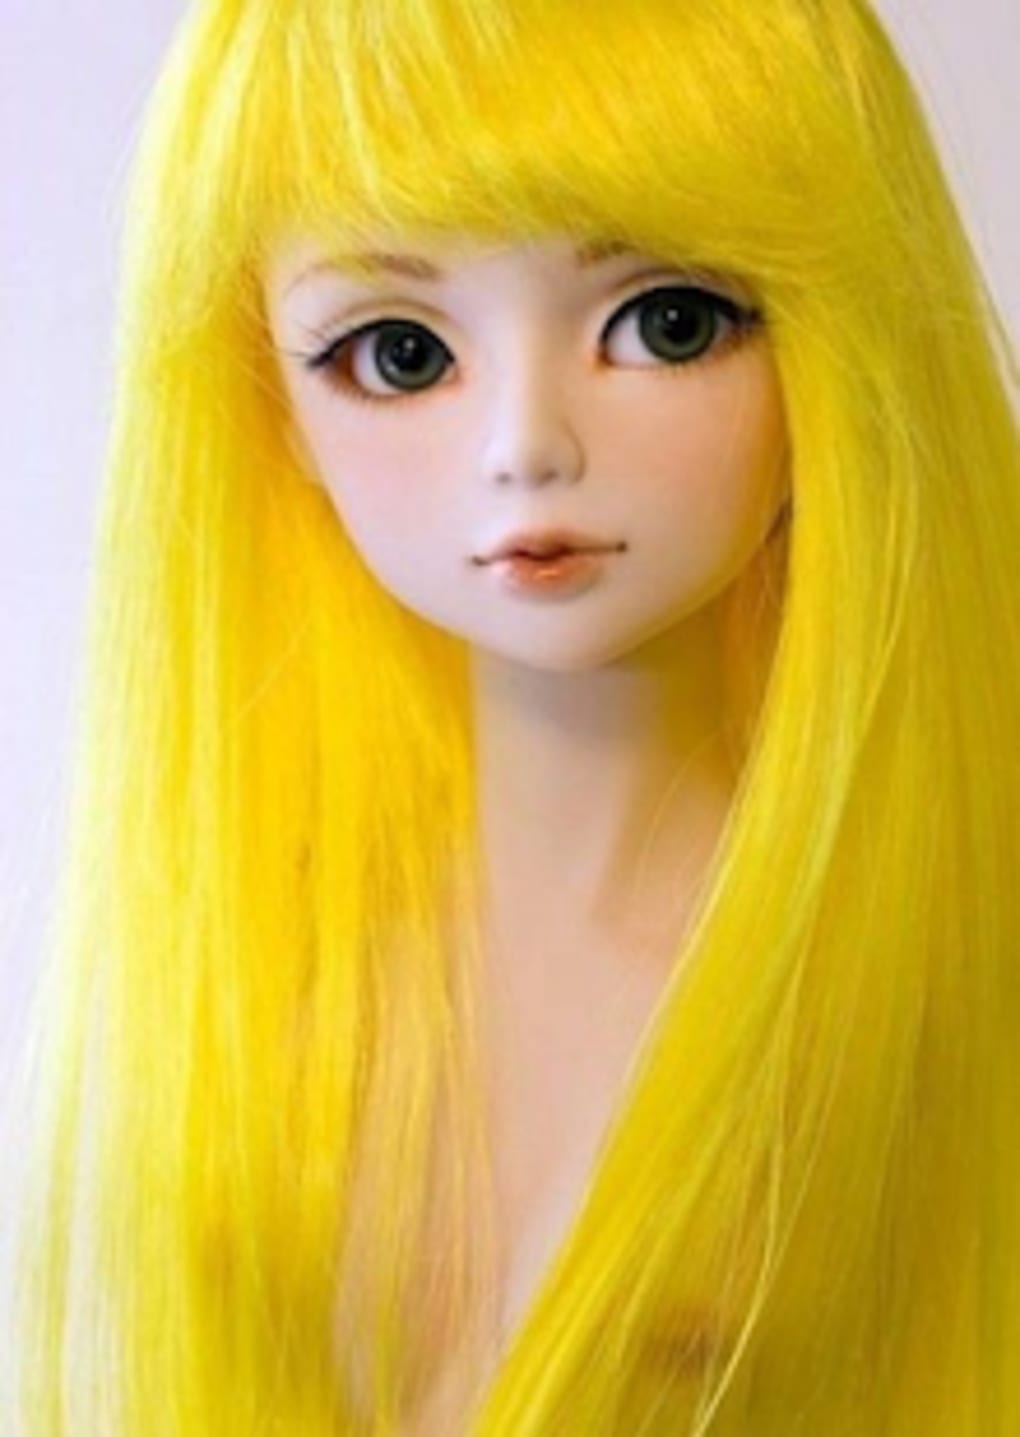 Barbie profile pictures